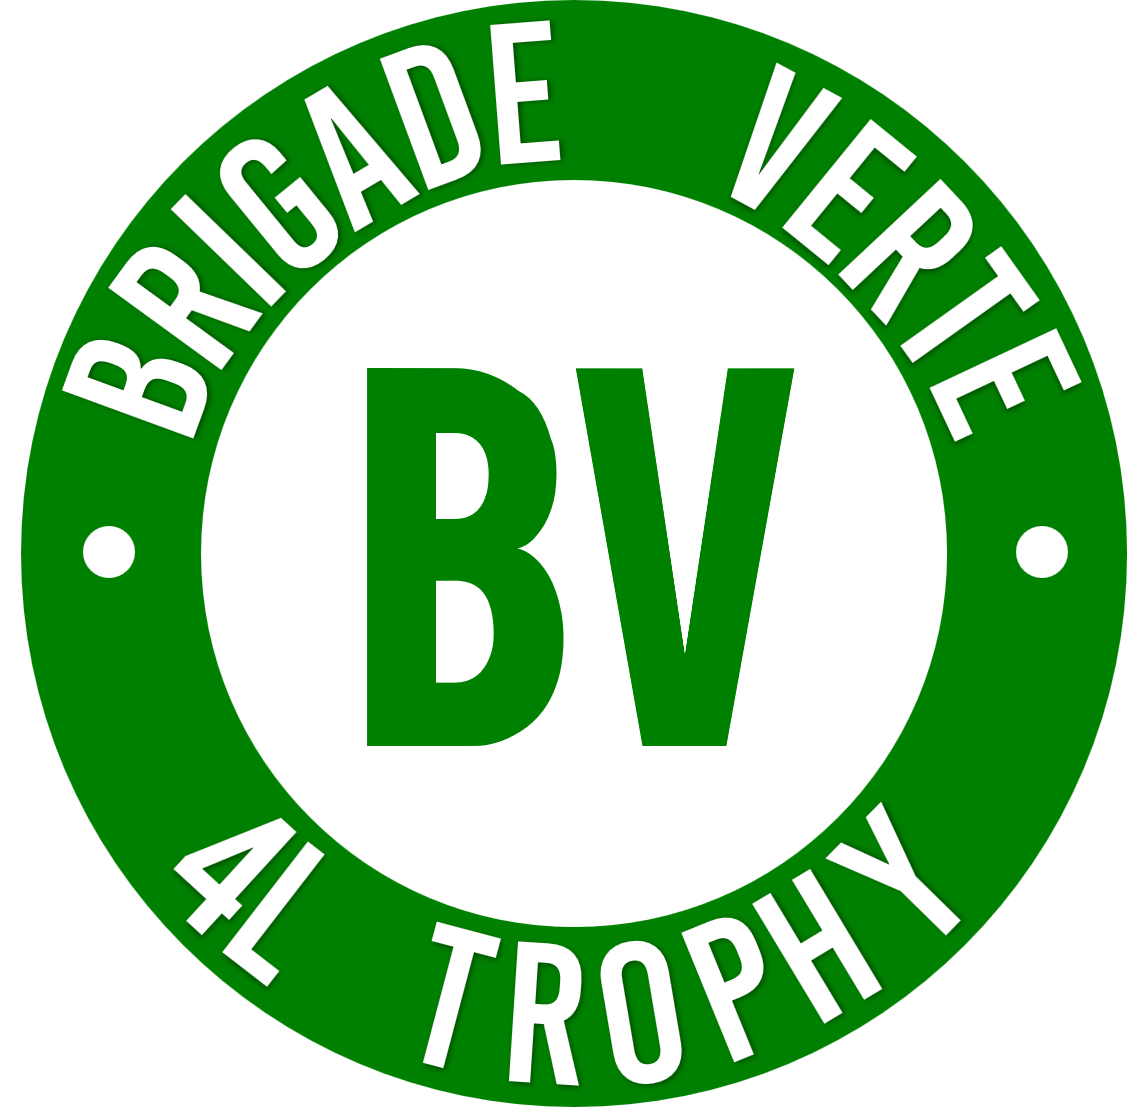 Brigade Verte - Raid 4L Trophy